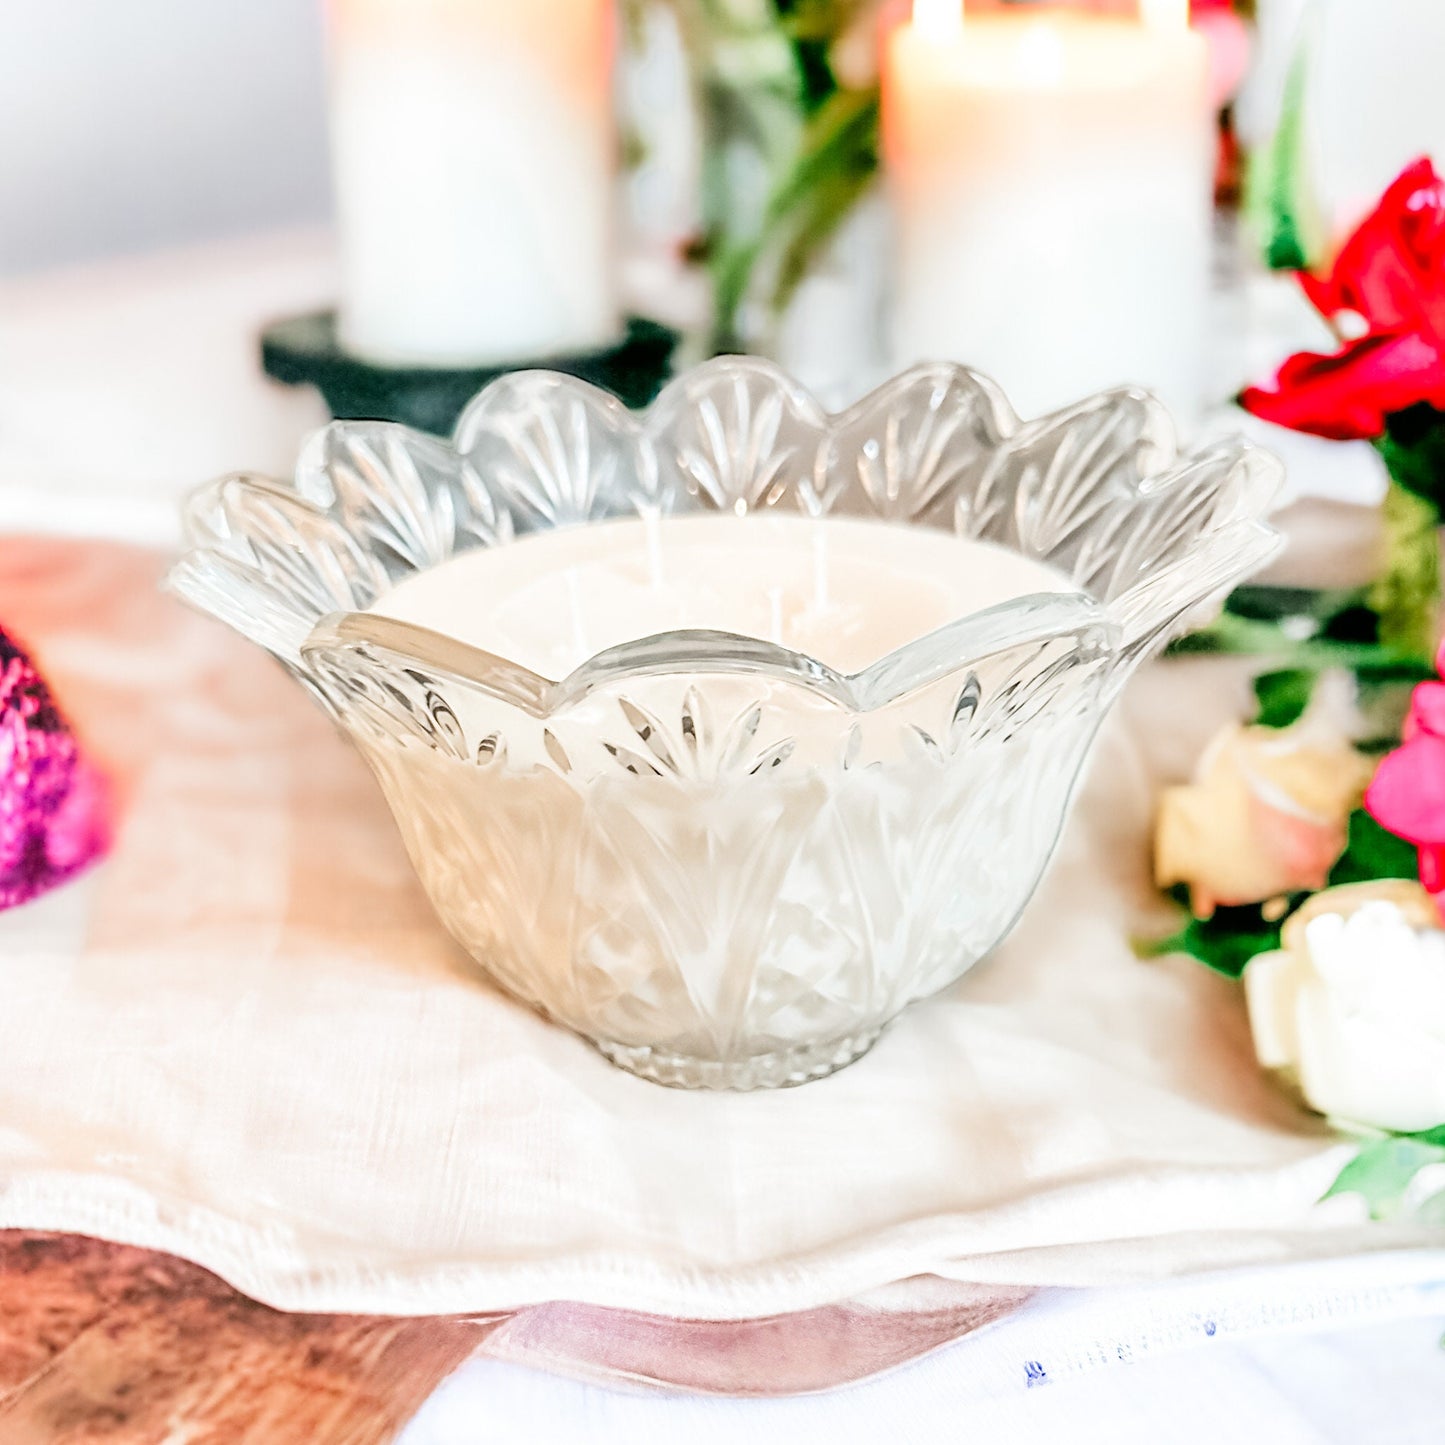 Gardenia Tuberose Candle in Vintage Crystal Bowl | Elegant Home Decor